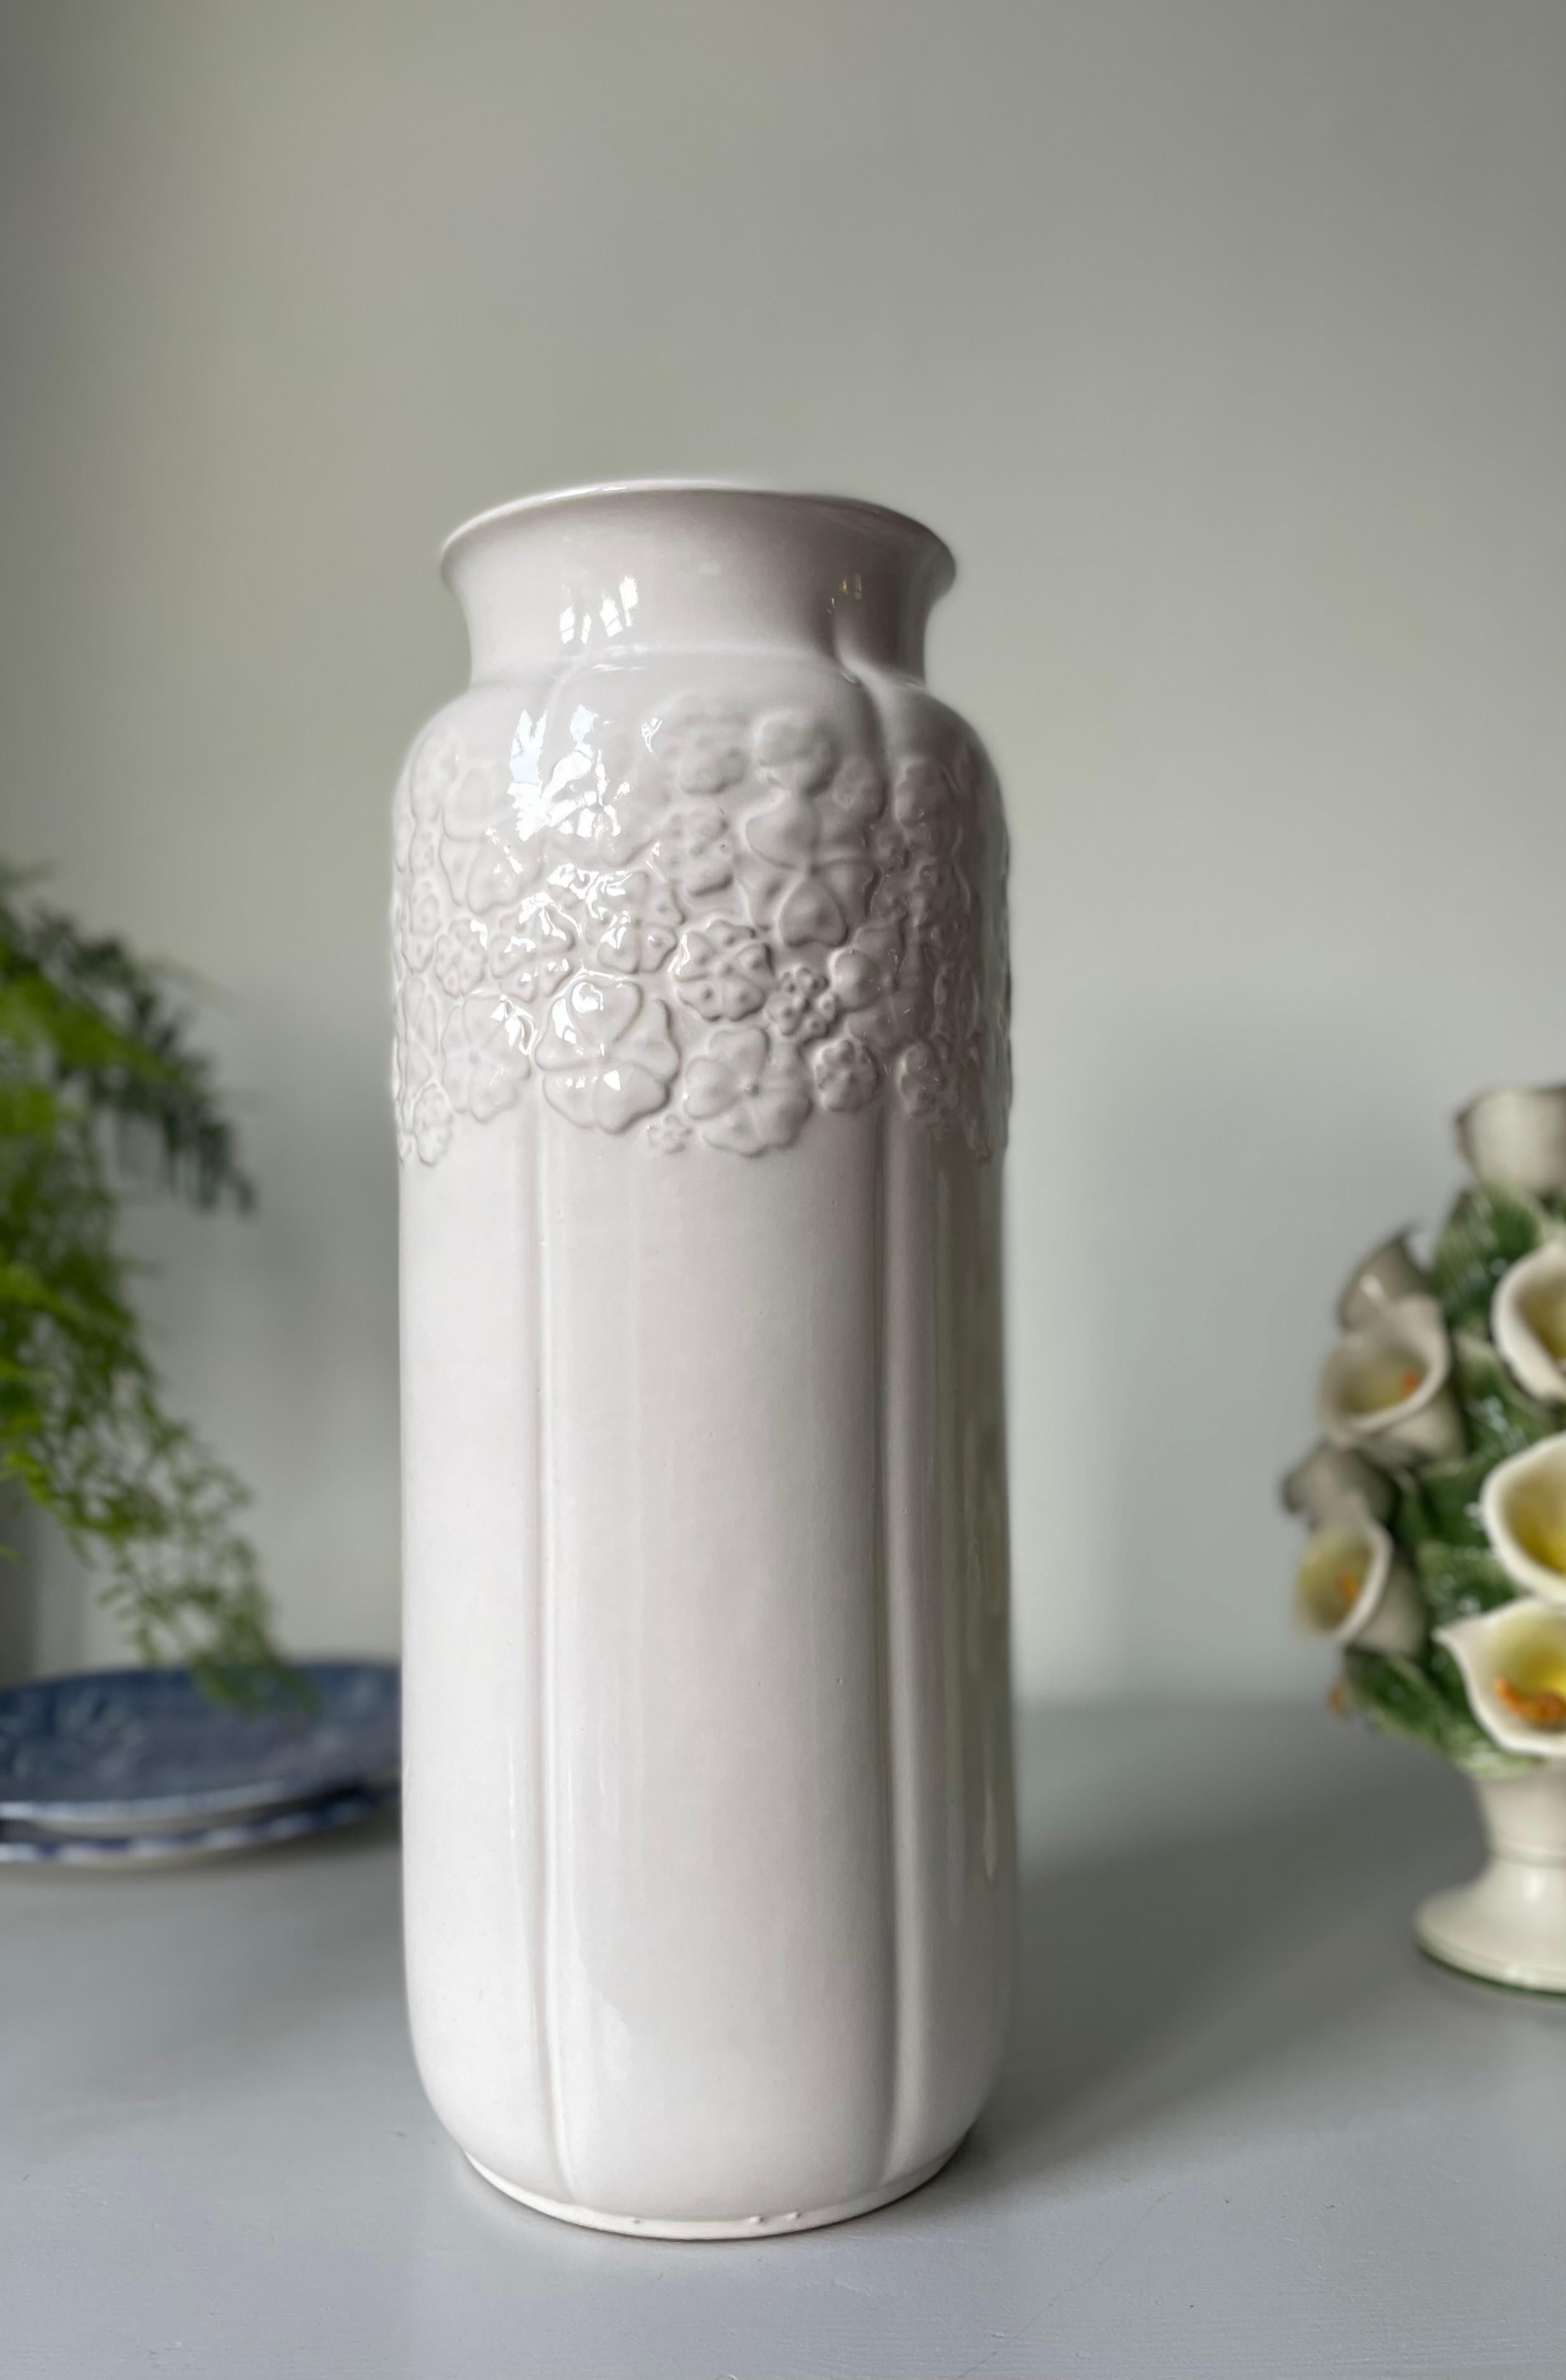 German Bay Keramik Tall White Modernist Floor Vase With Organic Decor, 1970s For Sale